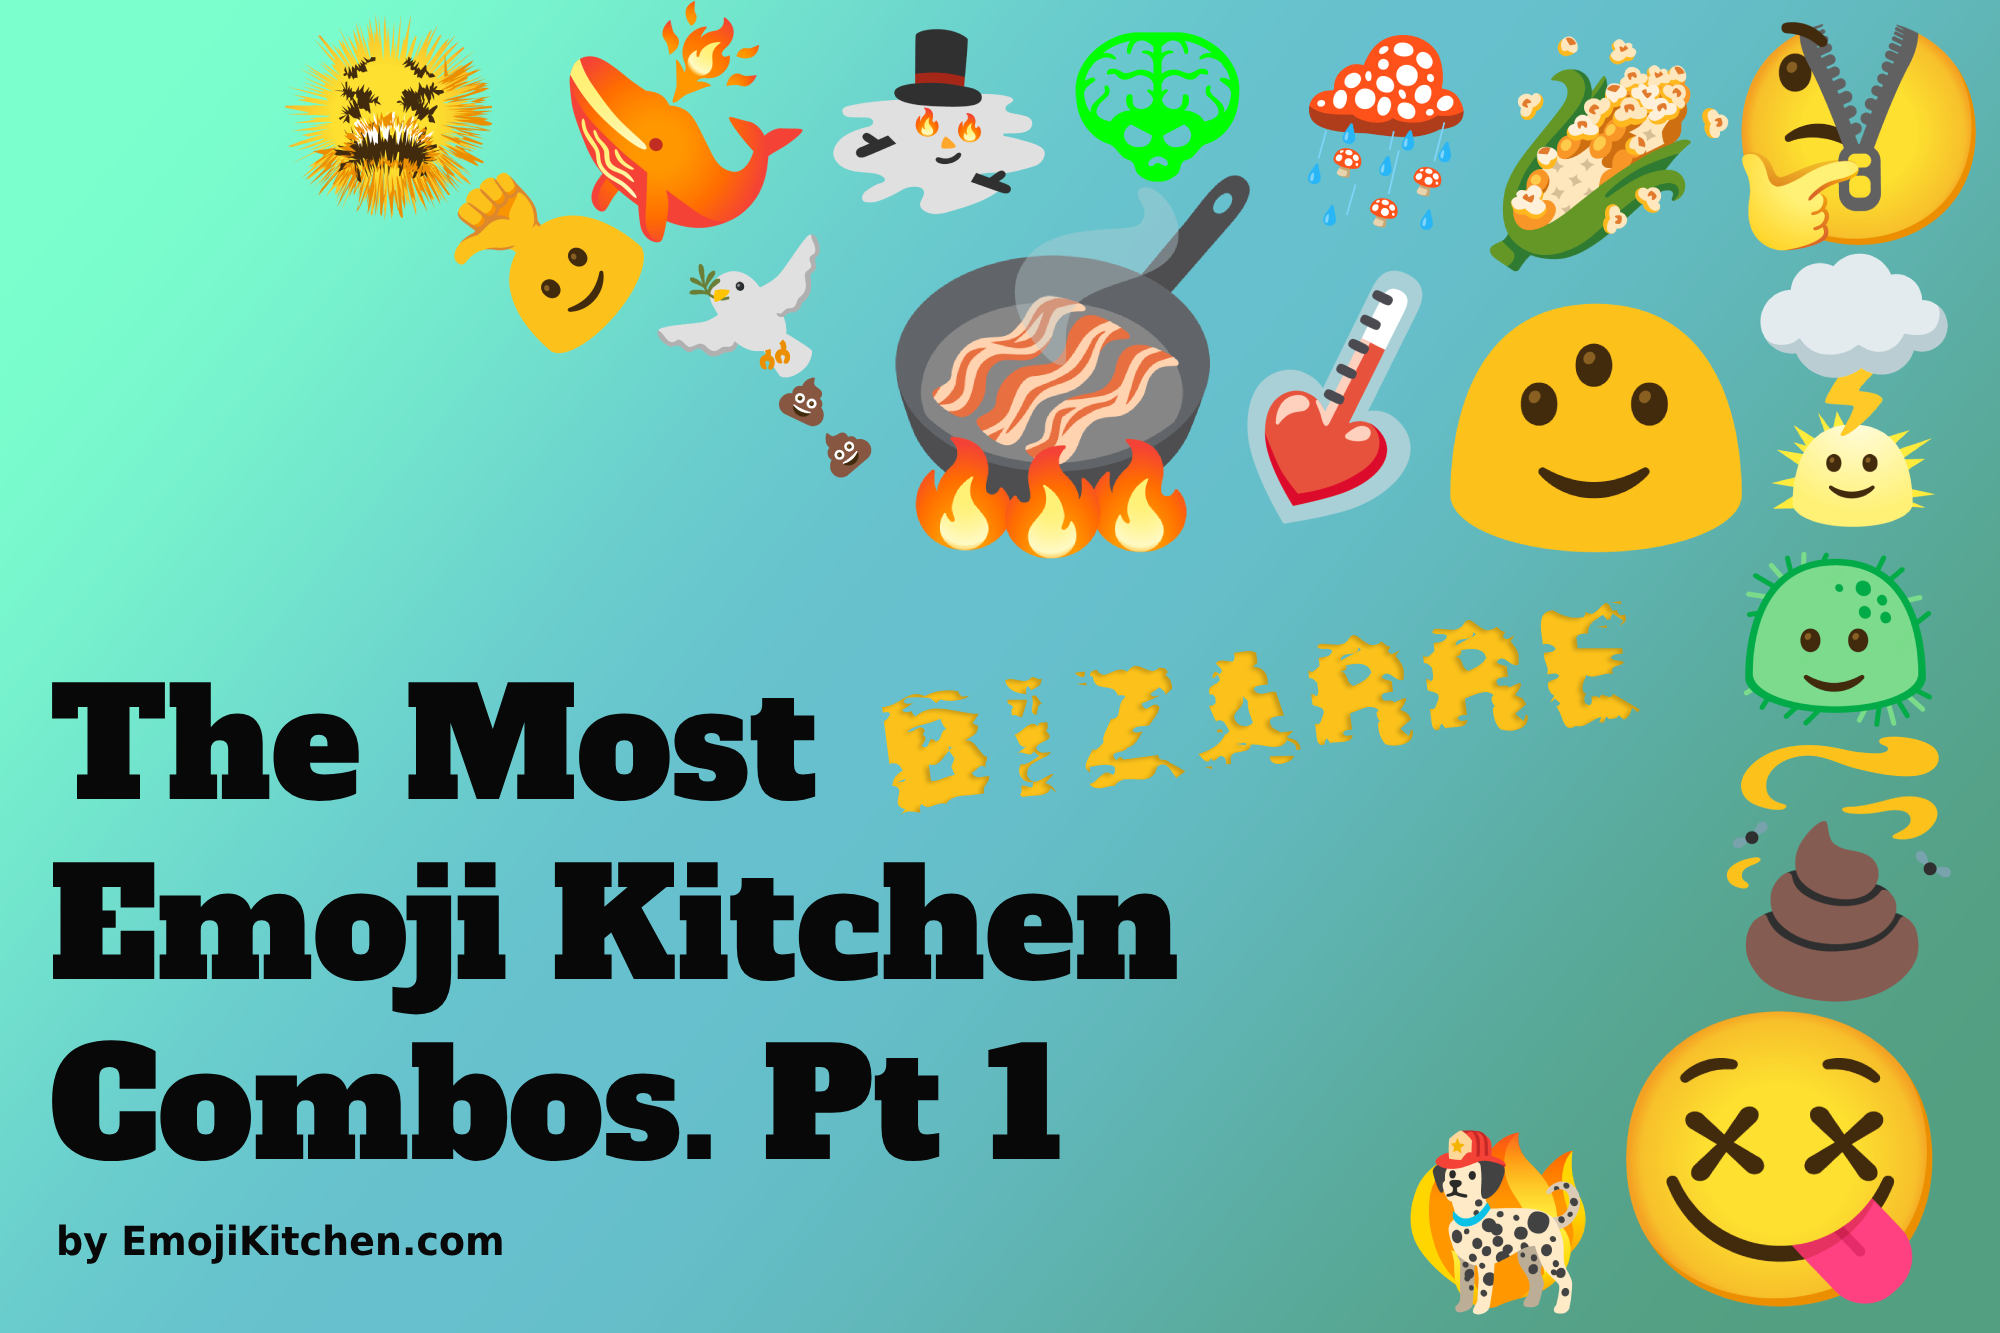 Emoji kitchen combos